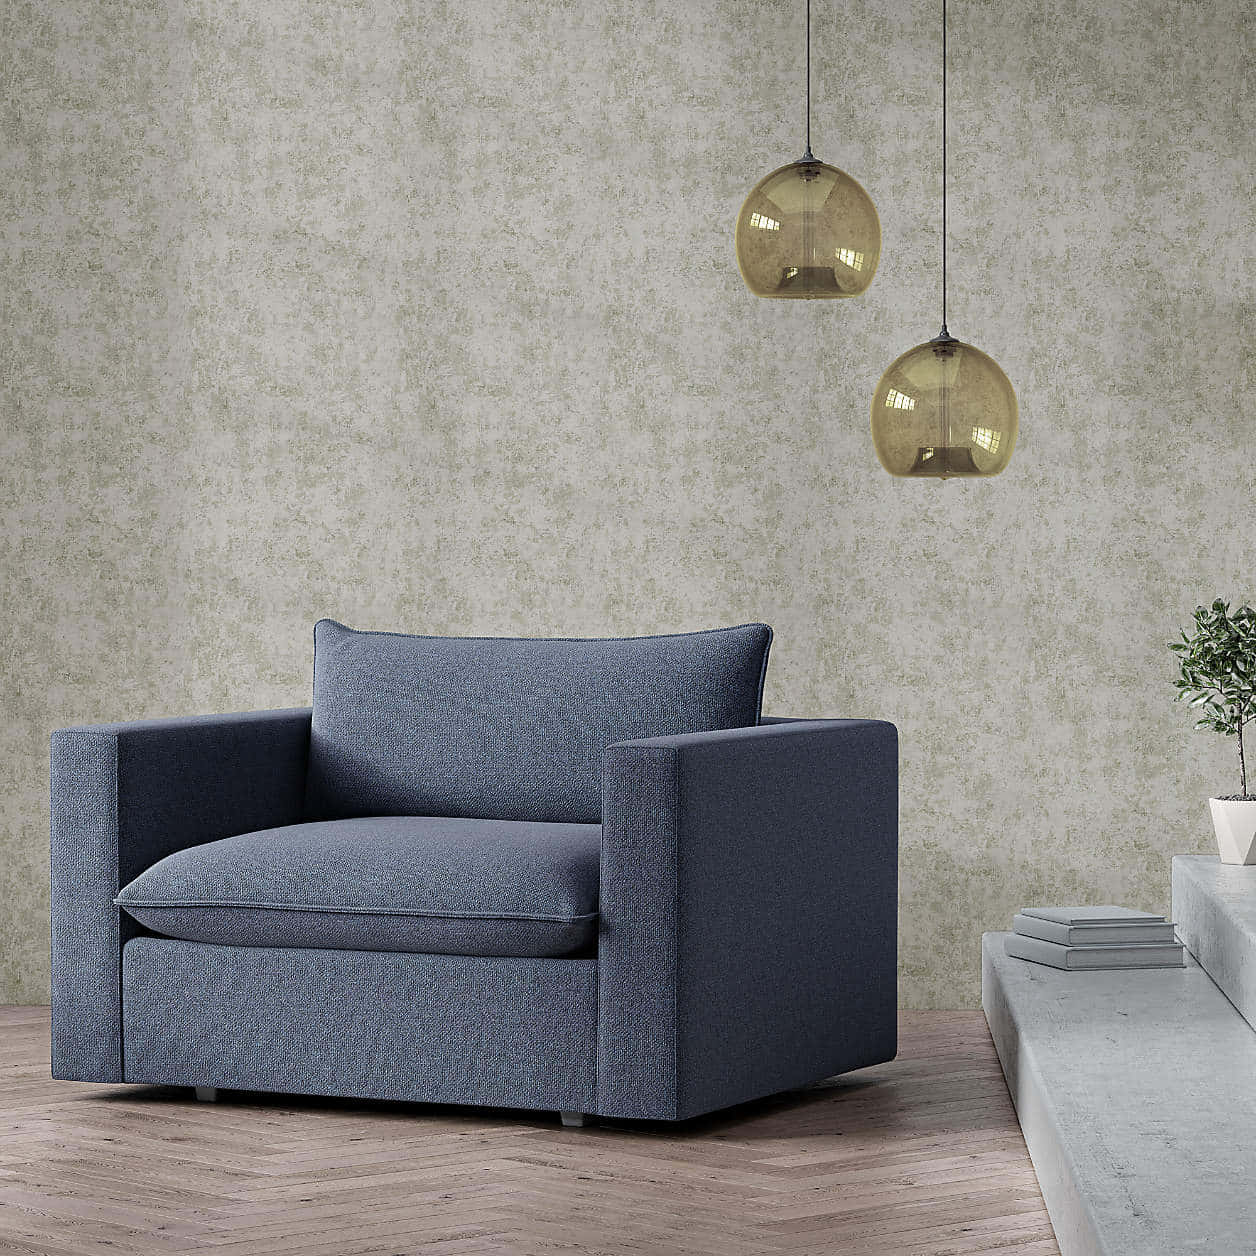 Navy Blue Elegant Couch Design Wallpaper